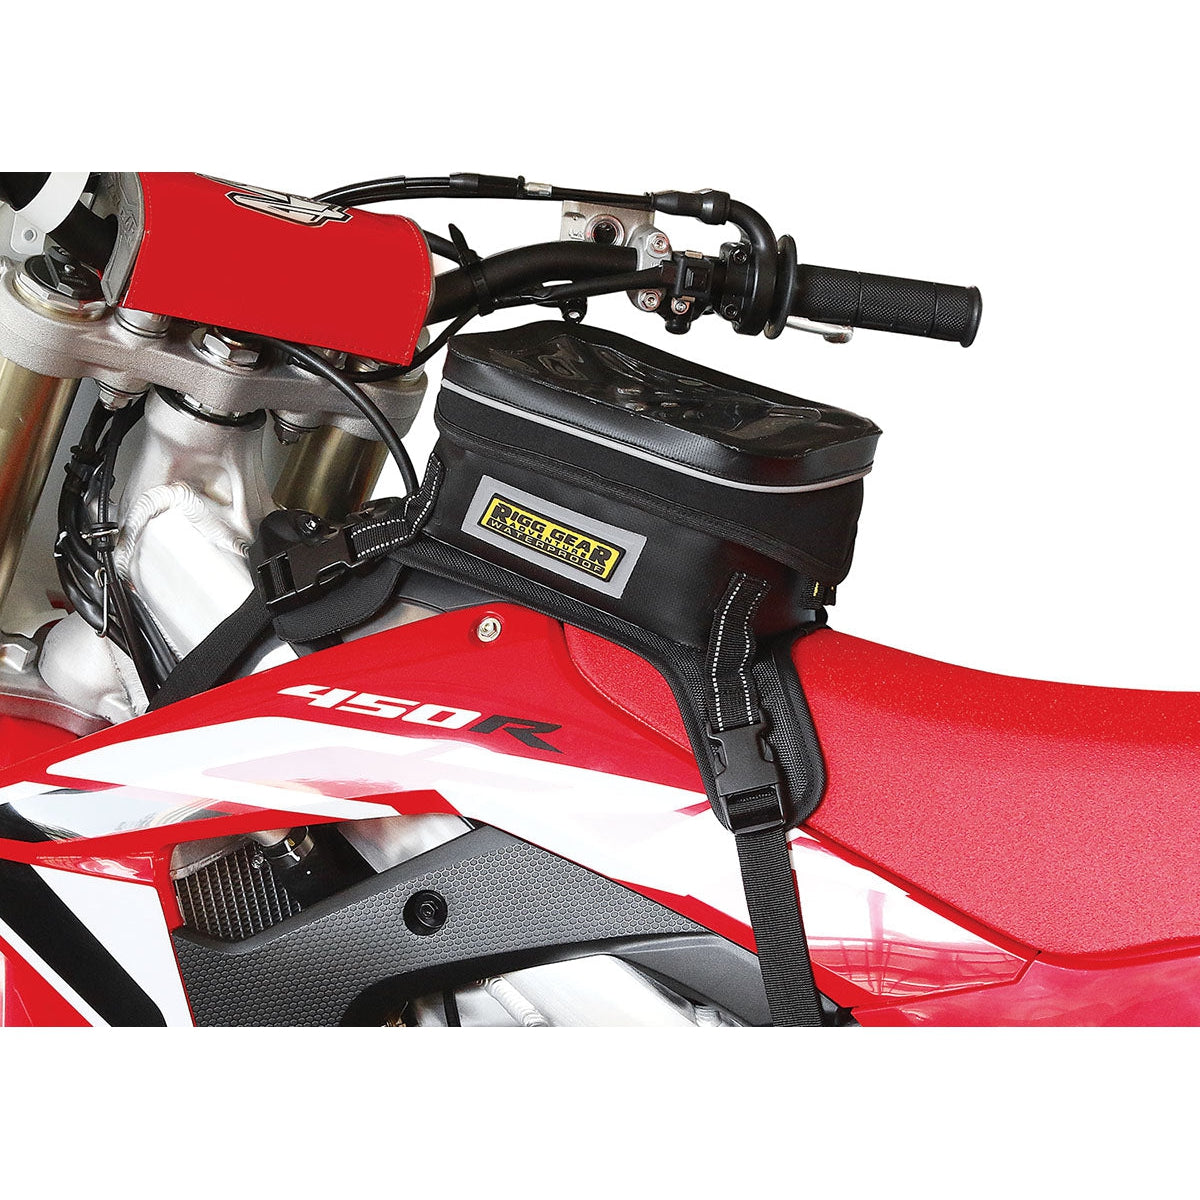 Rigg Gear Adventure SE-3060 Hurricane Dual-Sport and Enduro Motorcycle Waterproof Tank Bag